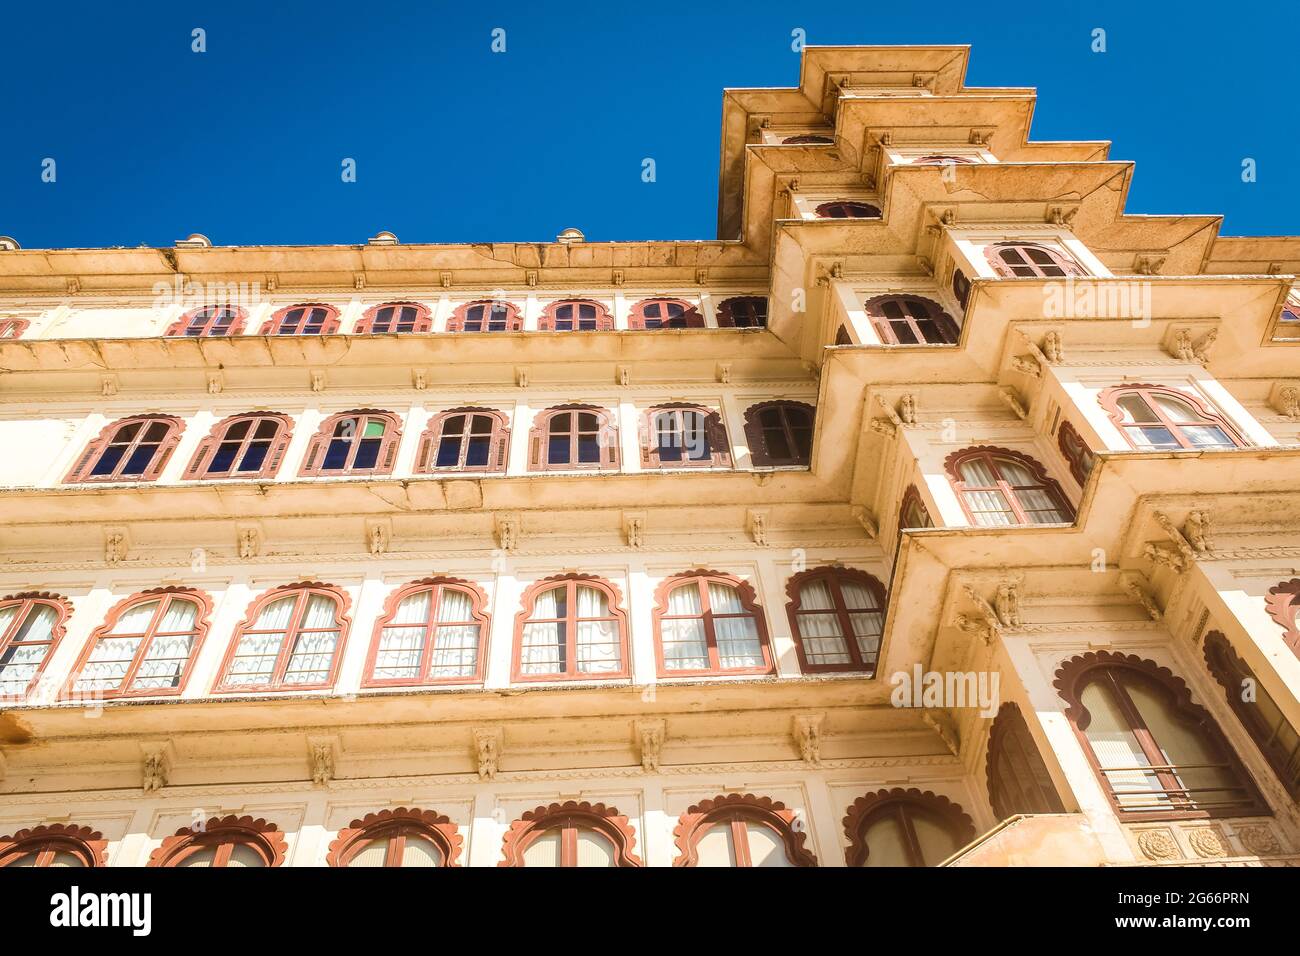 Udaipur City Palace Rajasthan India Stock Photo